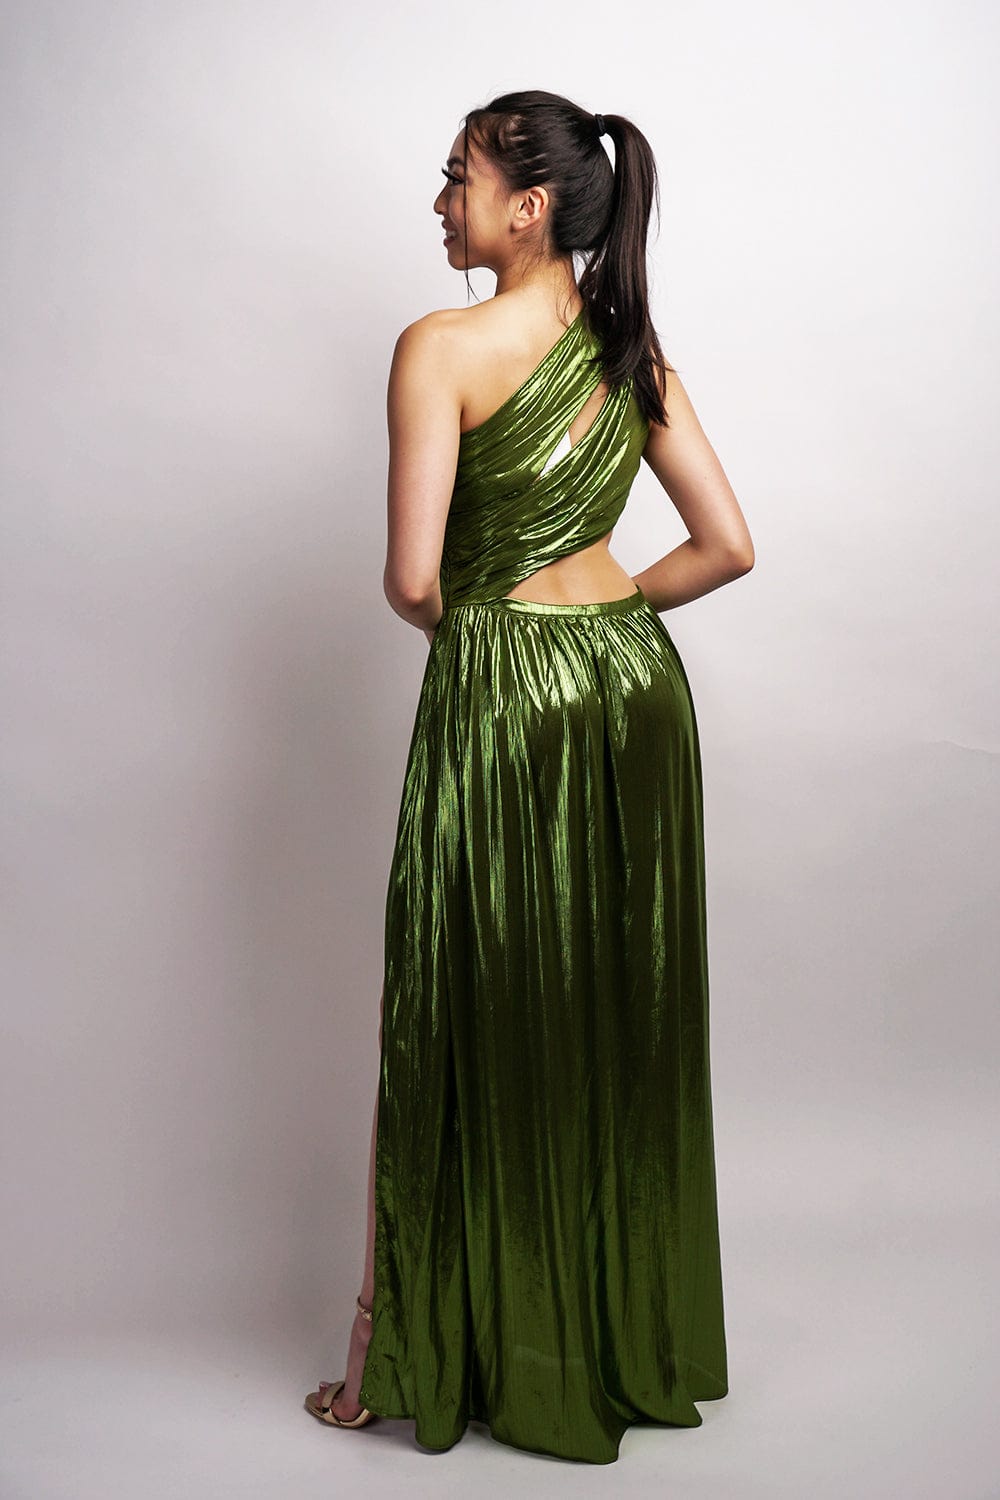 DCD GOWNS Metallic Moss One Shoulder Side Cutout Gown